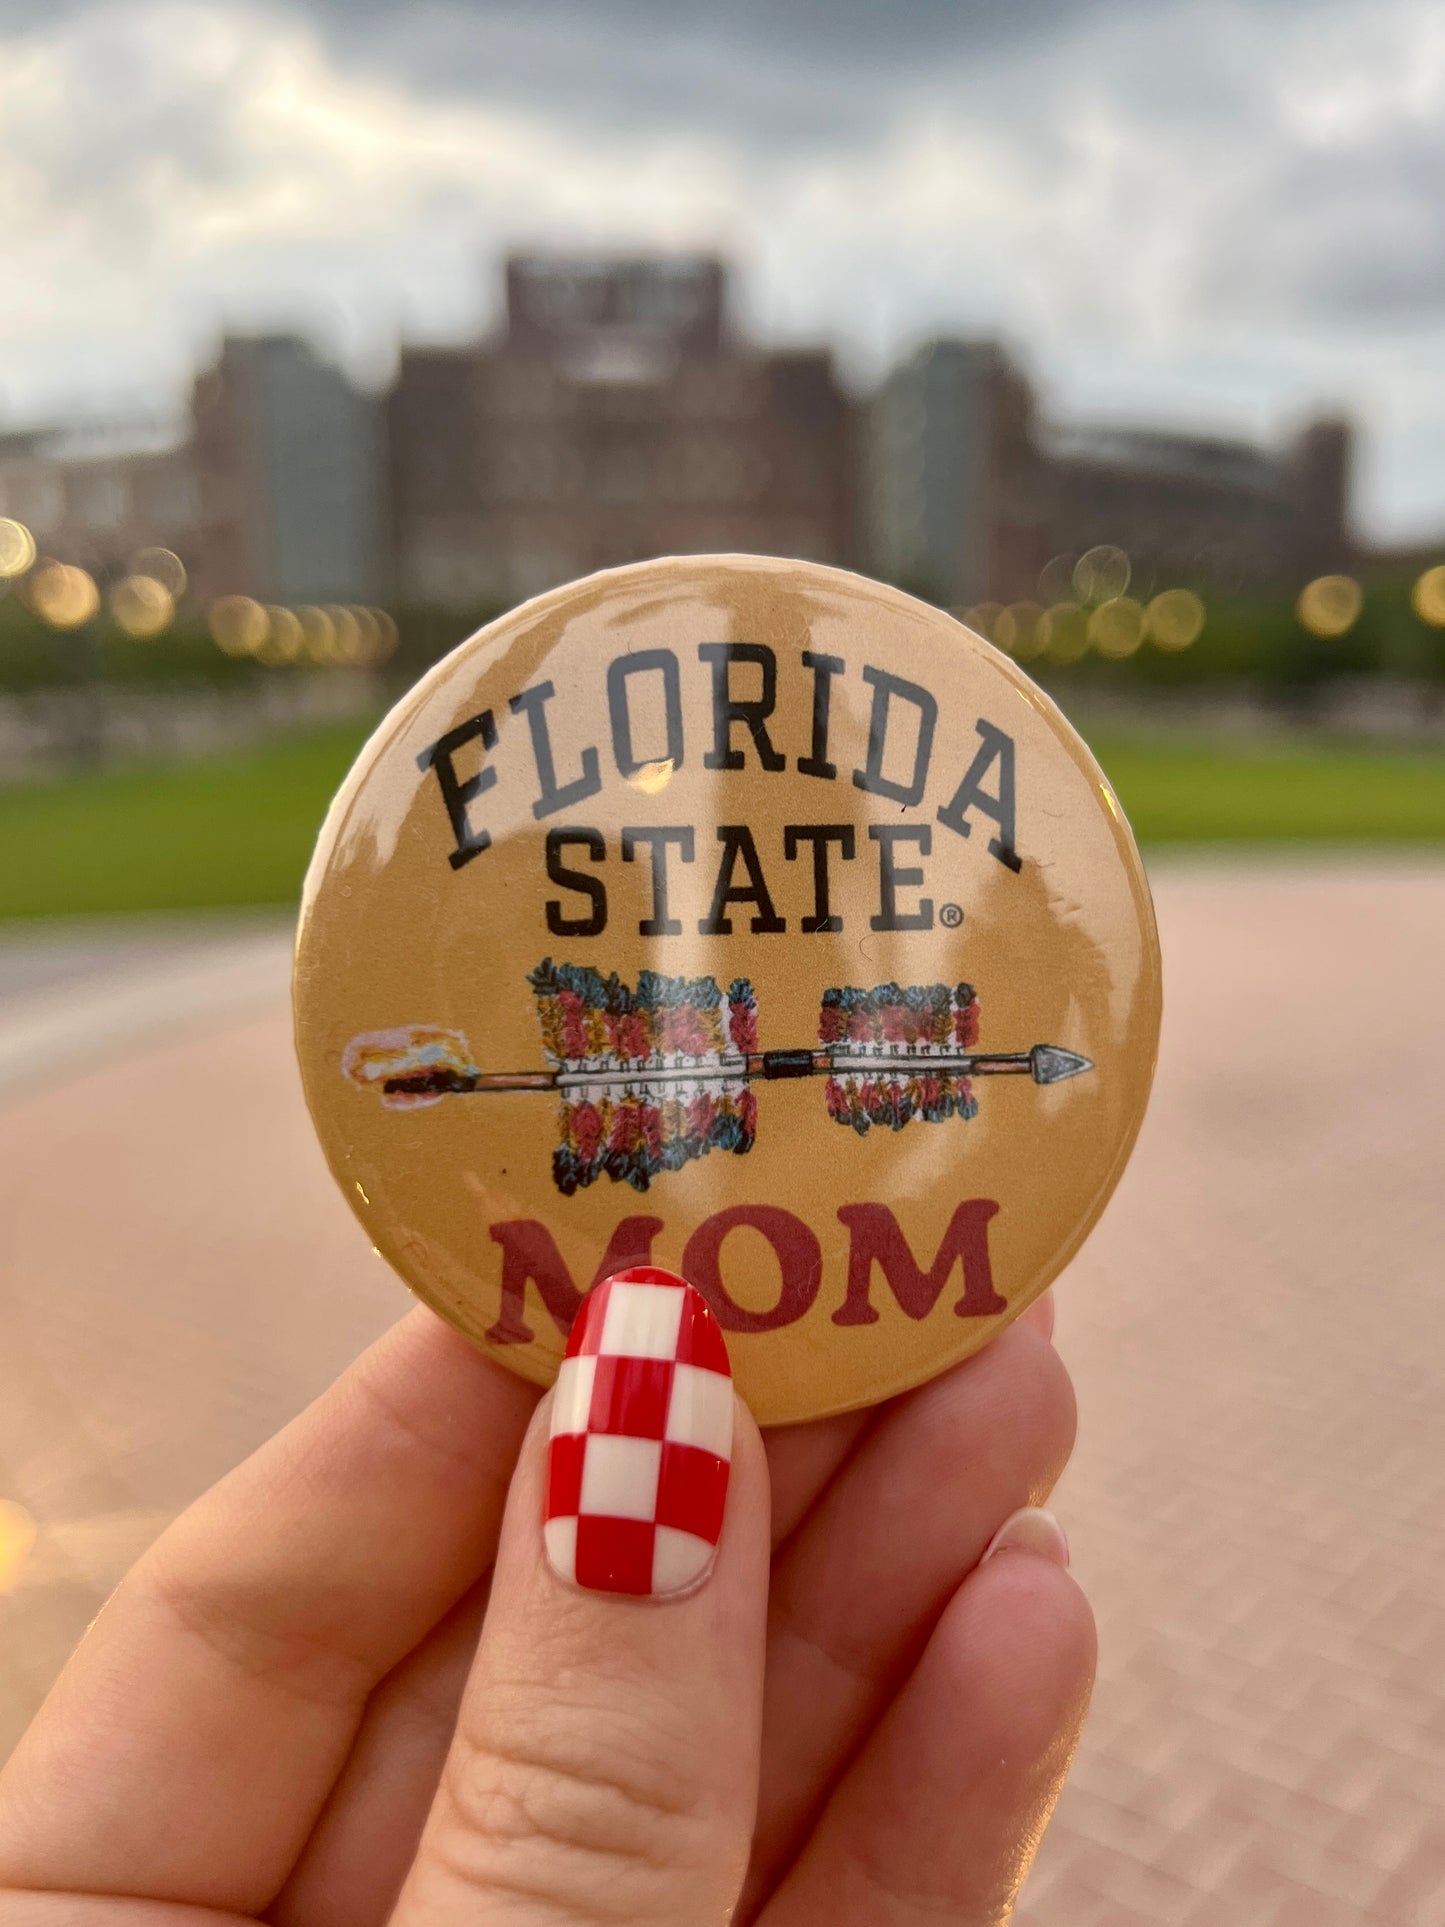 "FLORIDA STATE MOM" button